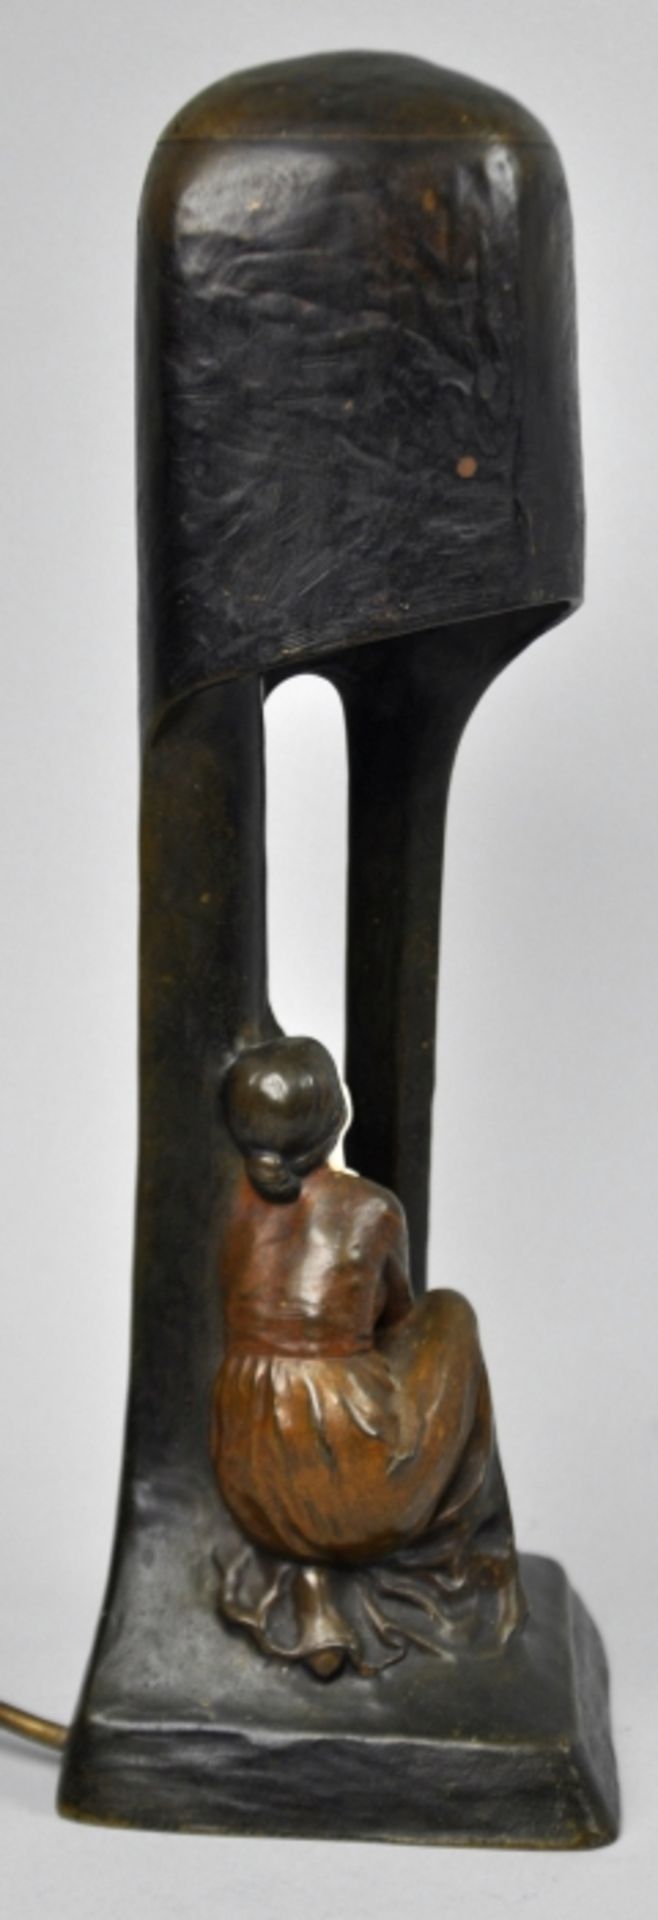 TERESZCZUK Peter (1875 Wybudow - 1963 Wien) Tischlampe mit sitzender Dame, Jugendstil, um 1900, - Image 4 of 4